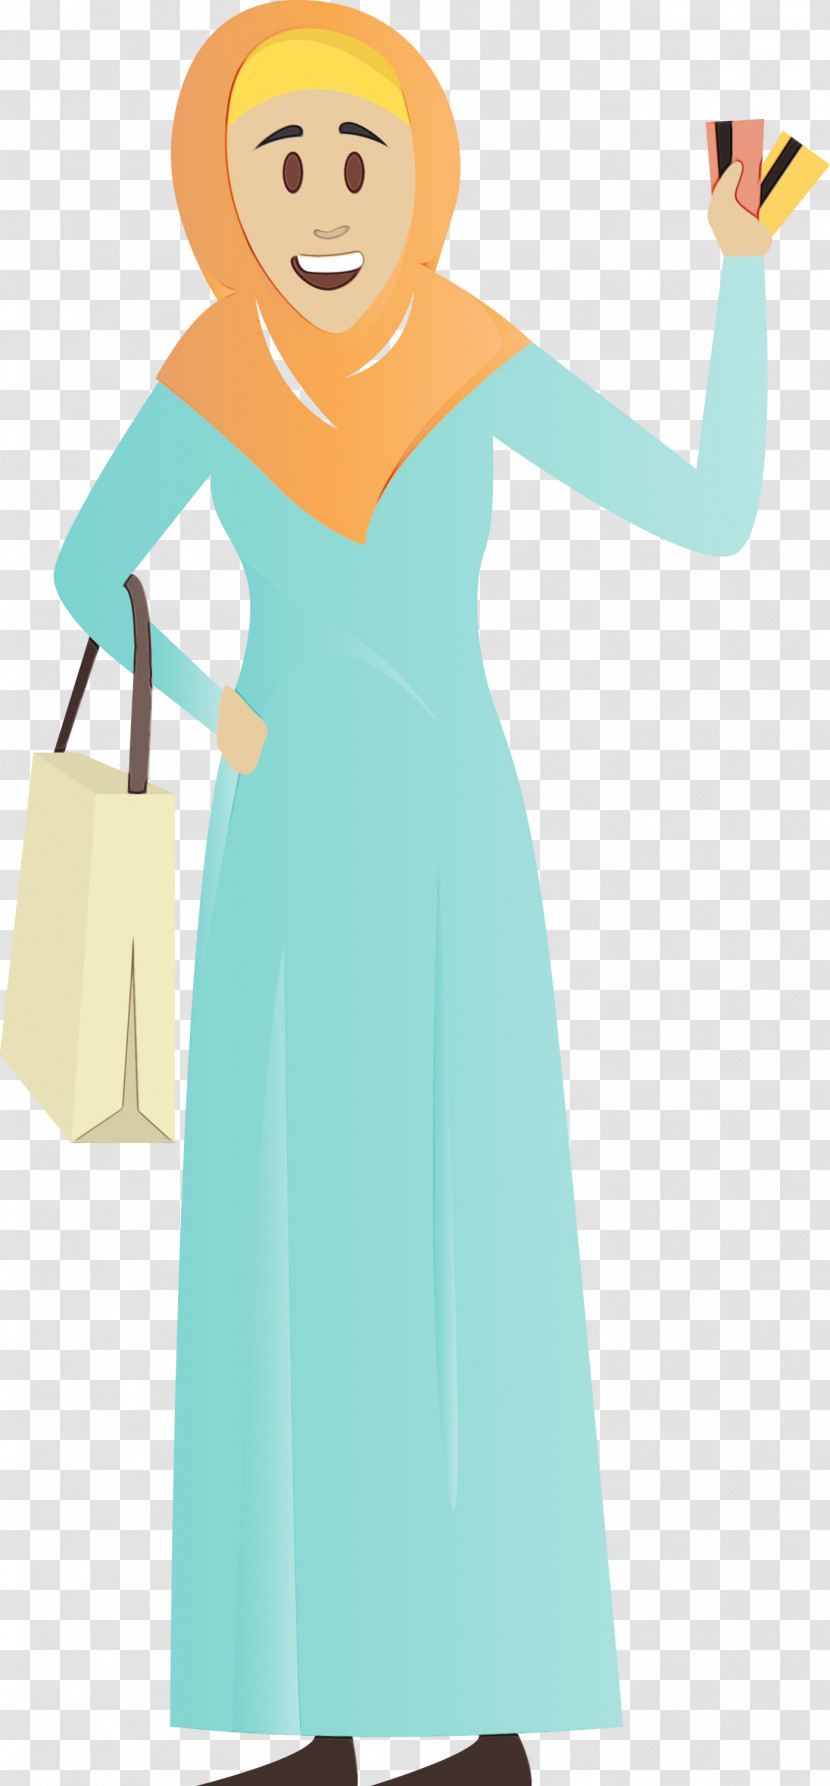 Clothing Dress Turquoise Aqua Teal Transparent PNG